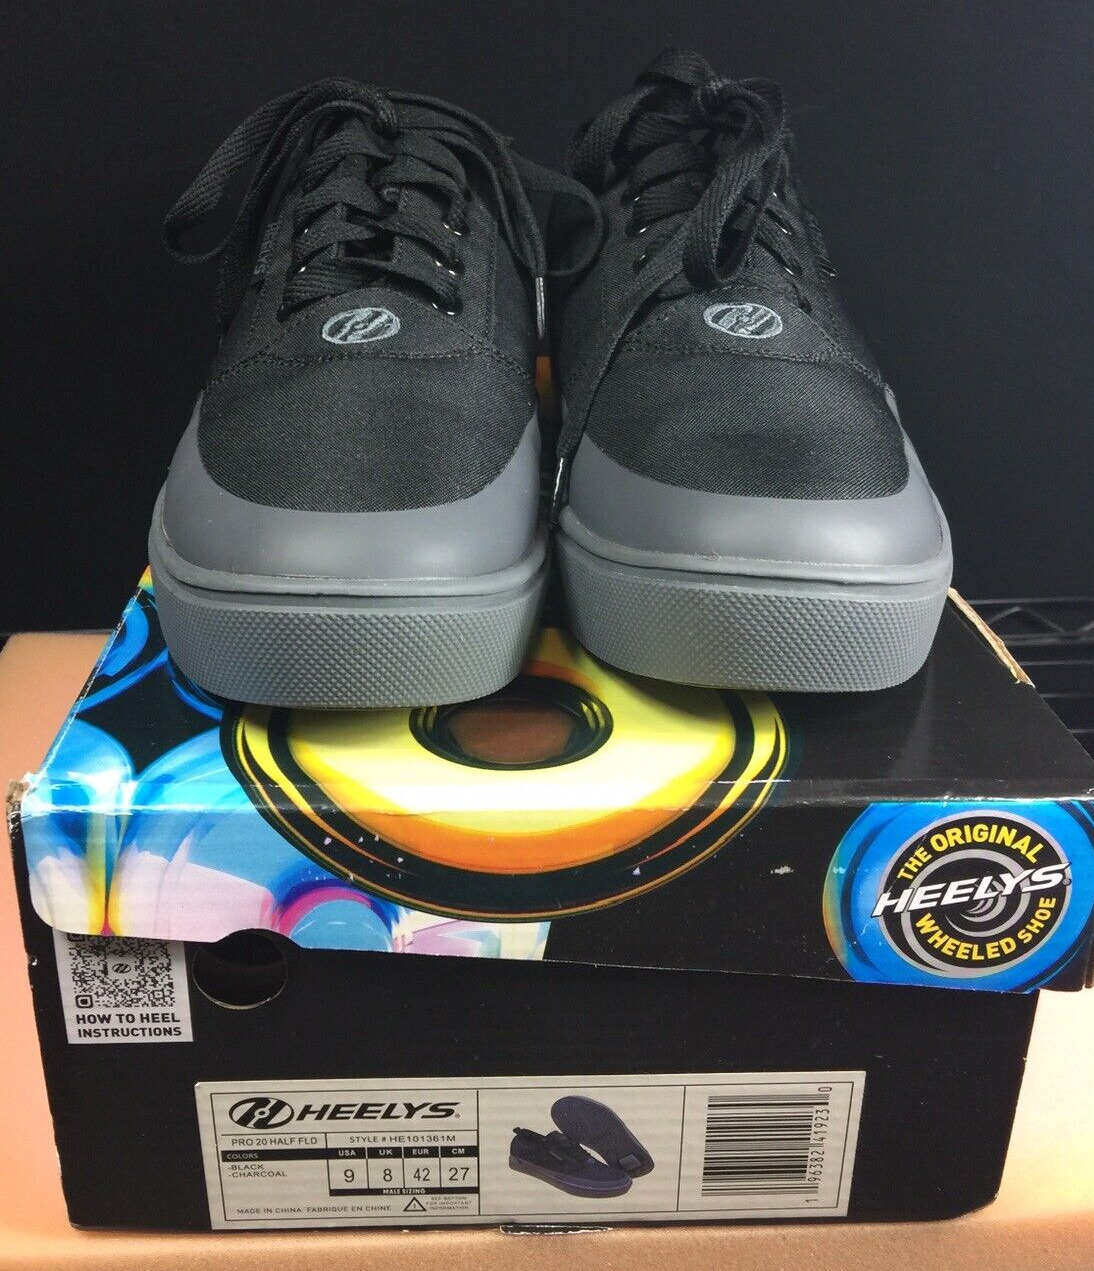 Heelys Launch 20 Skate Shoes Wheeled Lace Up Black Sneaker Size Men 9 W/box